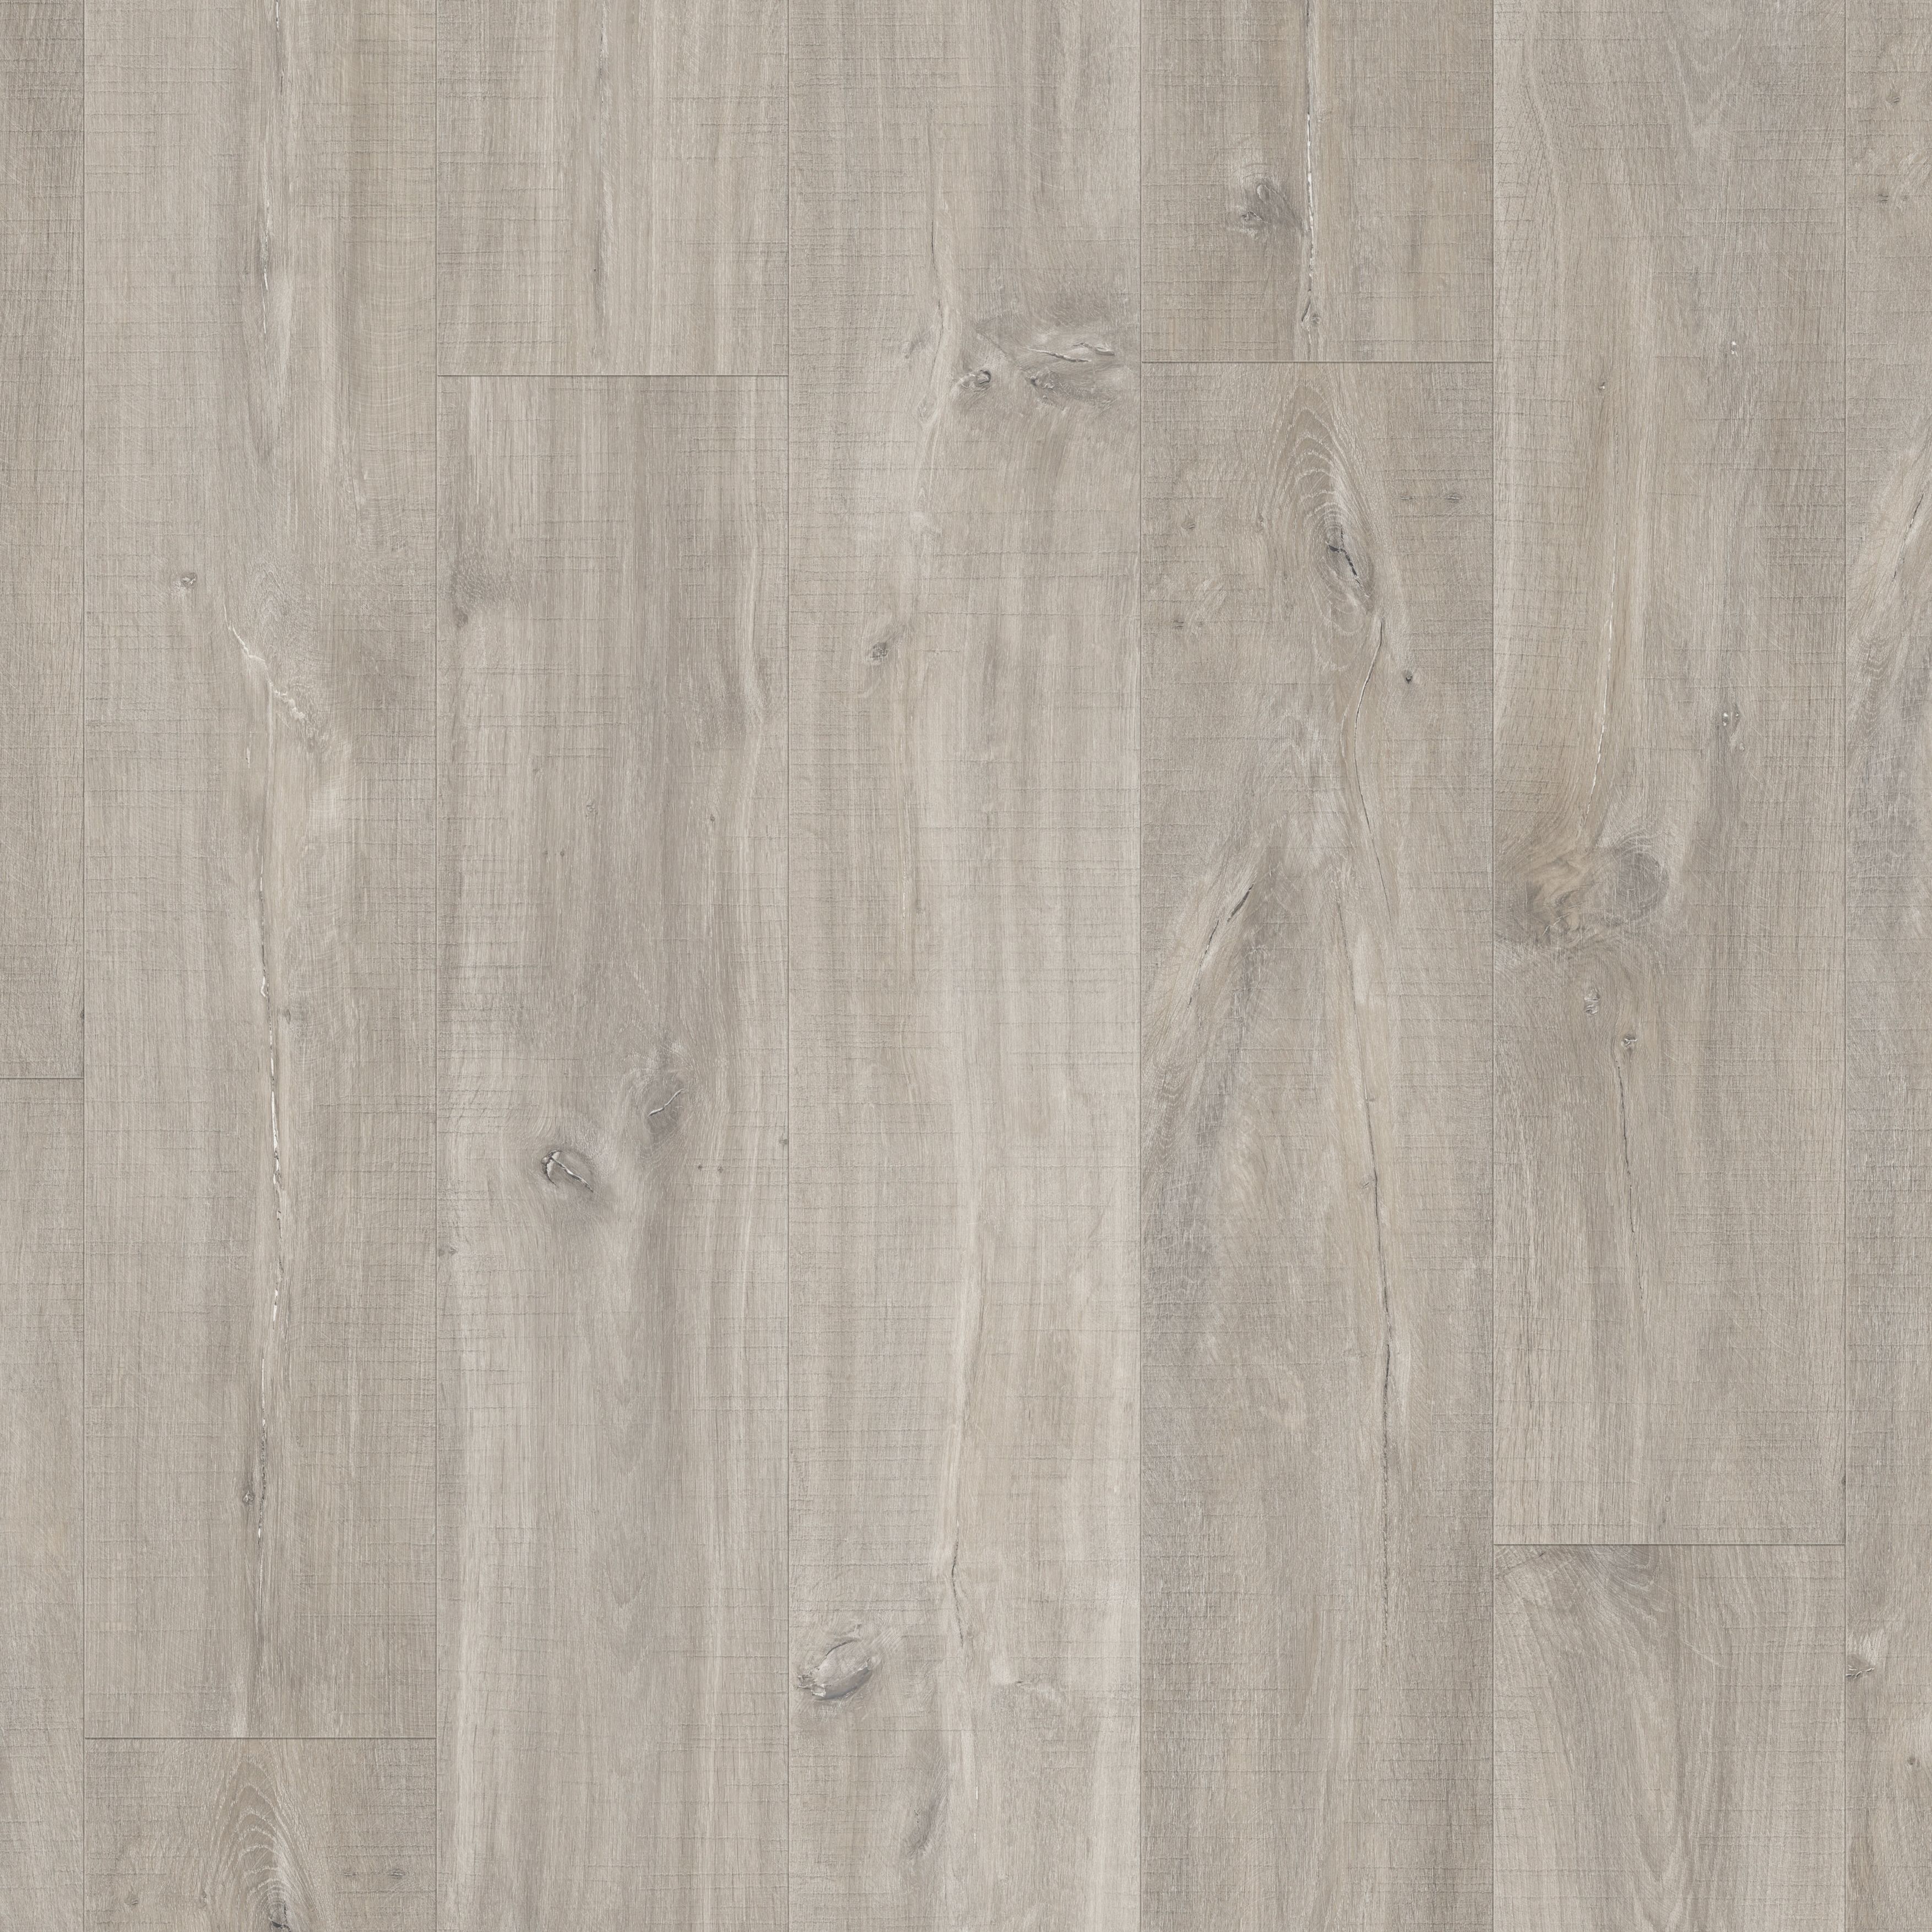 Quick-step Paso Ash oak Wood effect Click flooring, 2.13m², Pack of 9